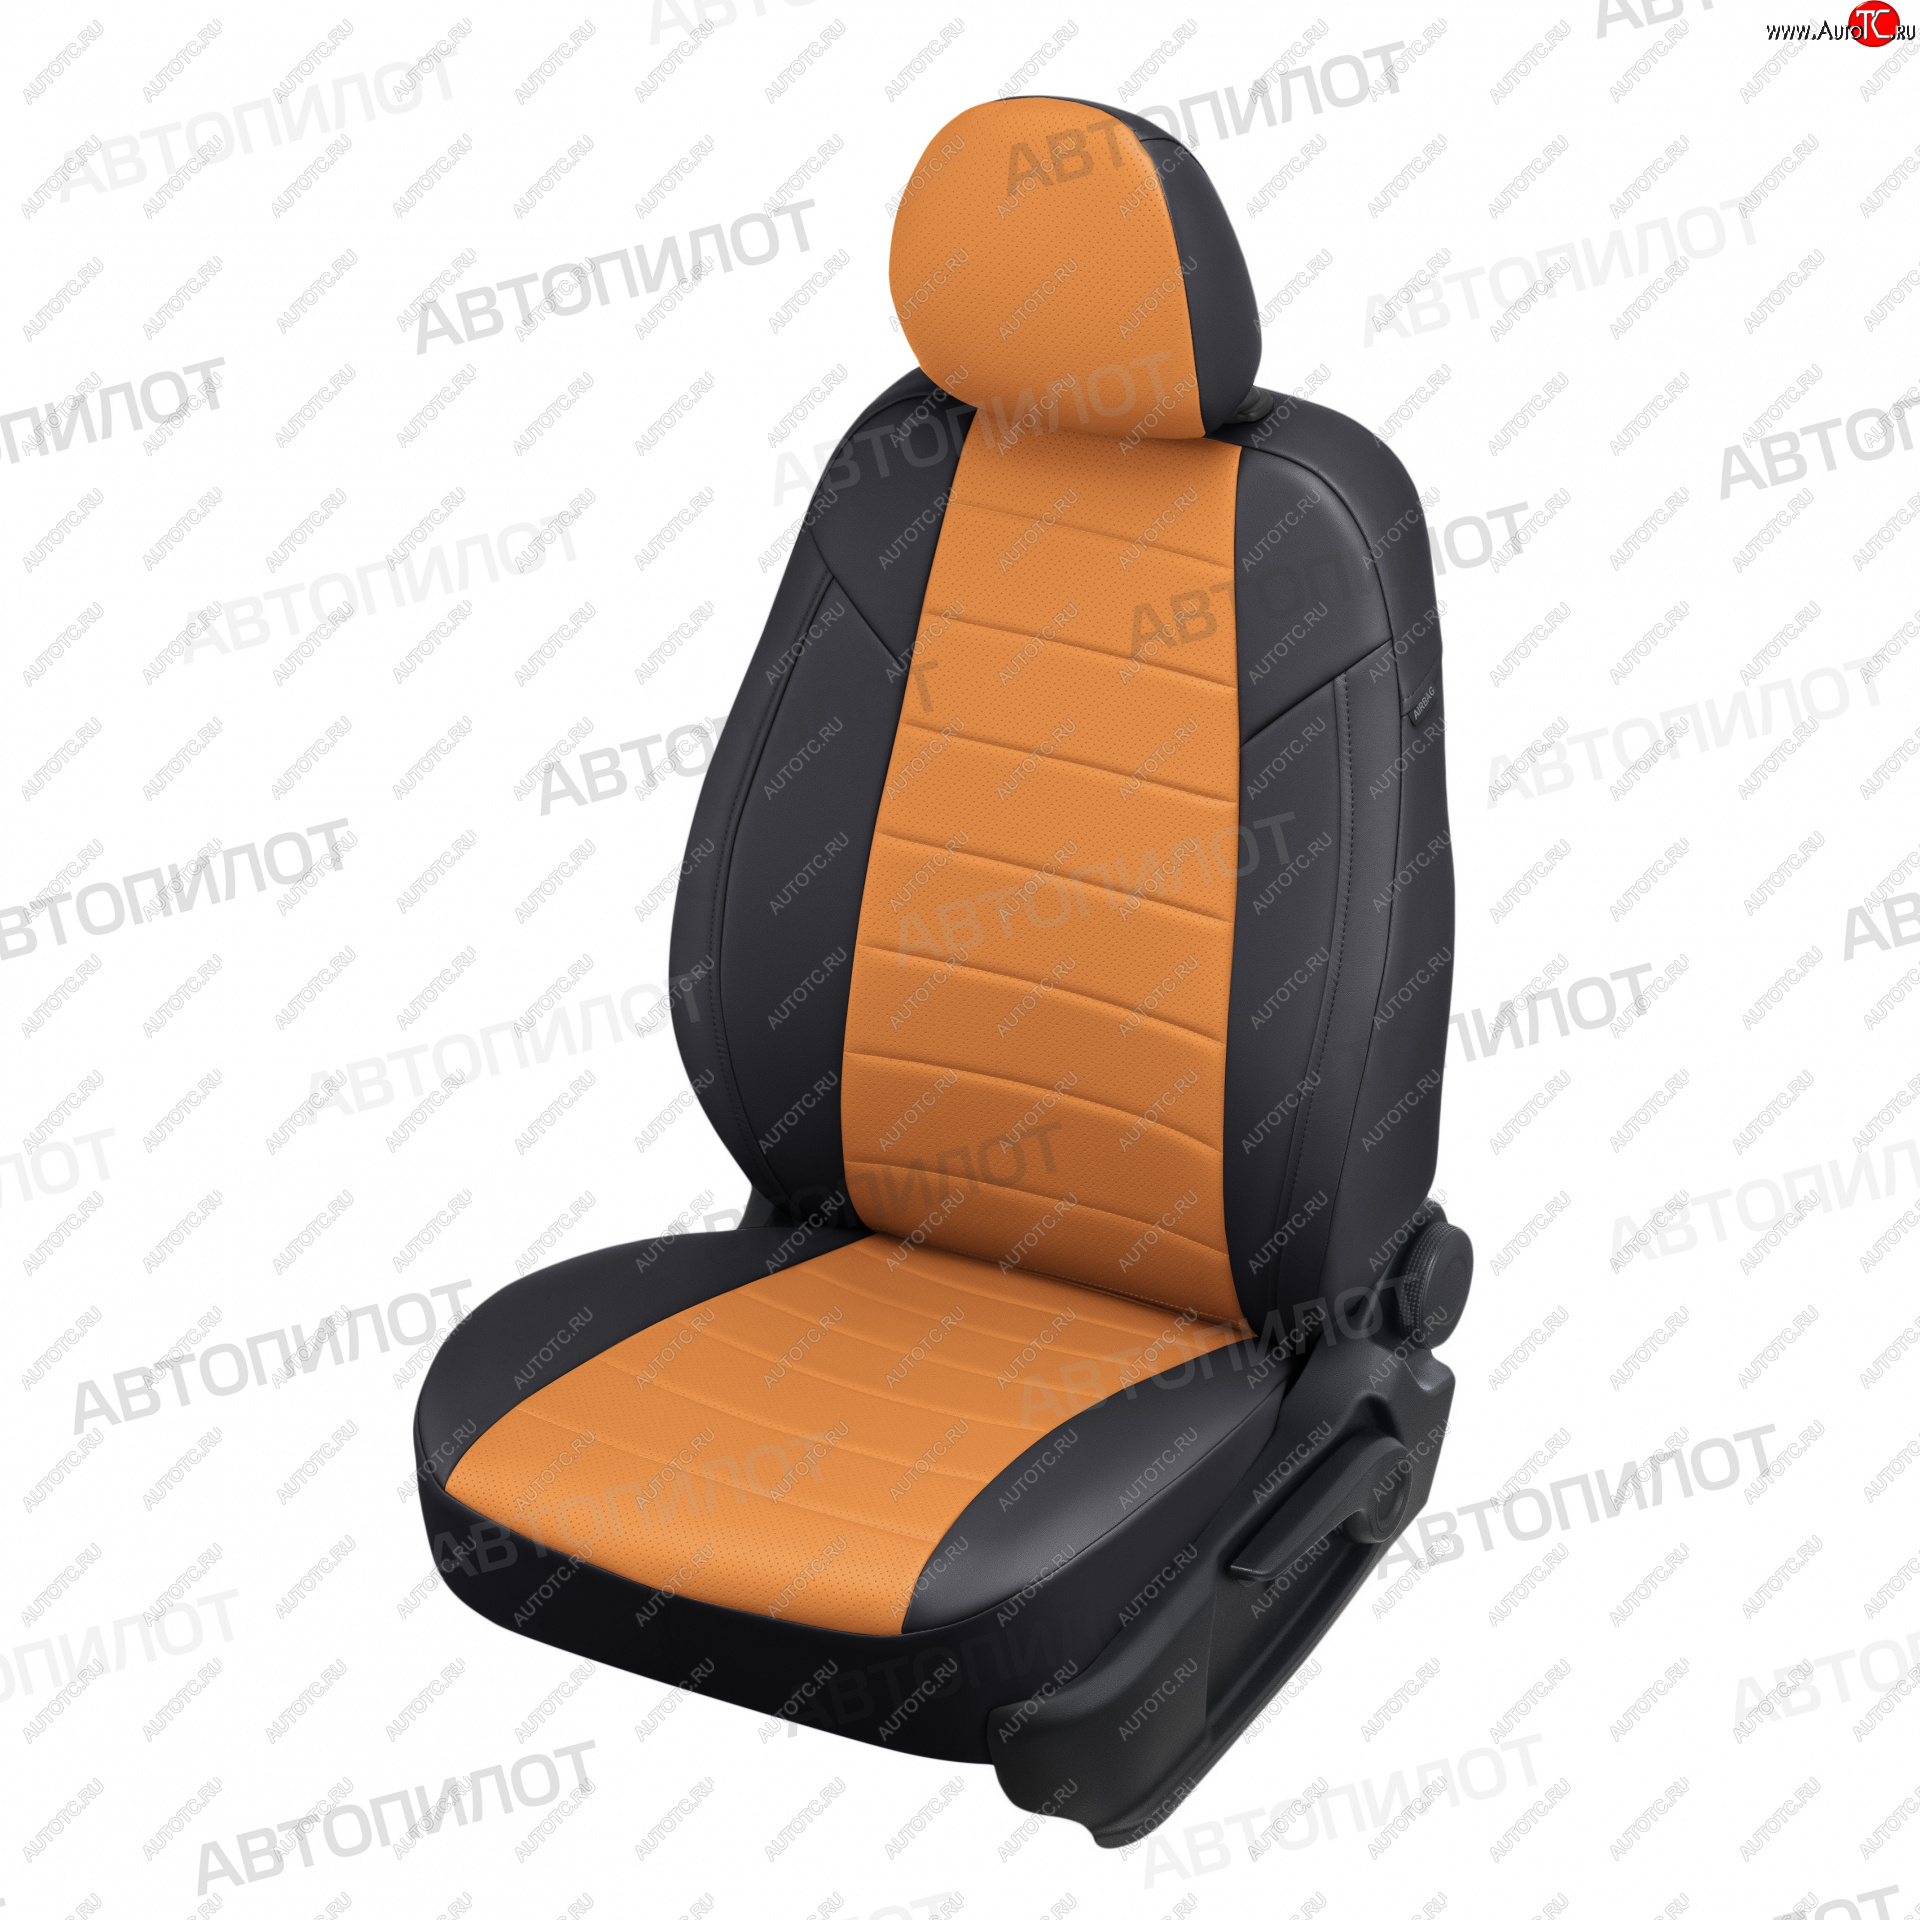 13 449 р. Чехлы сидений (экокожа) Автопилот  KIA Ceed  1 ED (2006-2012) (черный/оранж)